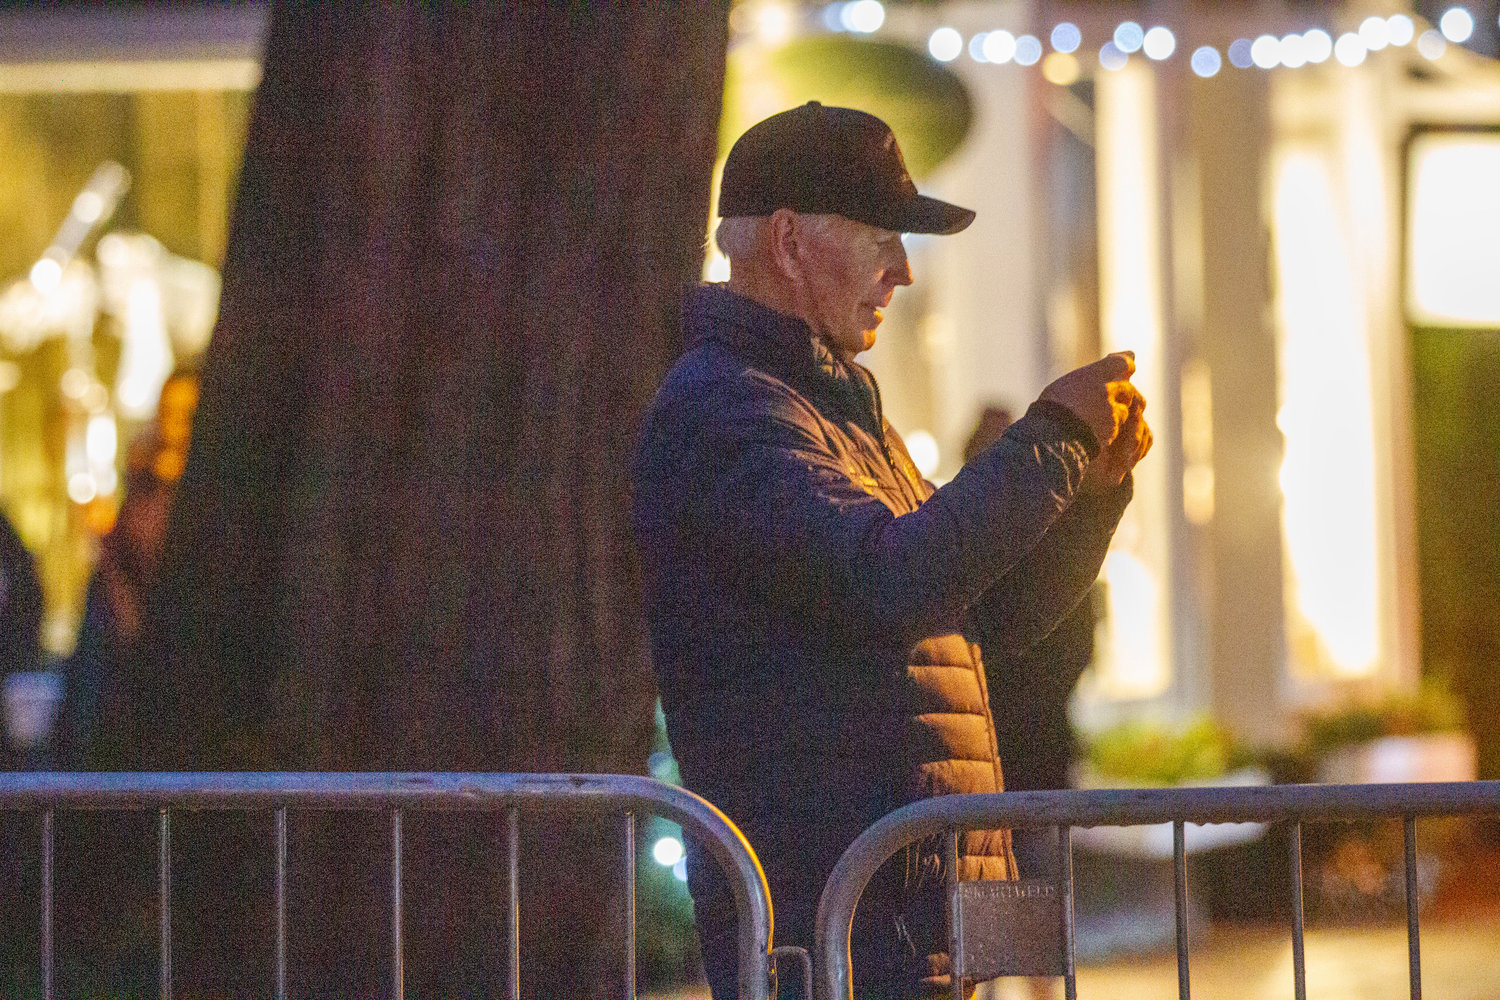 President Biden downtown during Friday's Main Street tree-lighting.